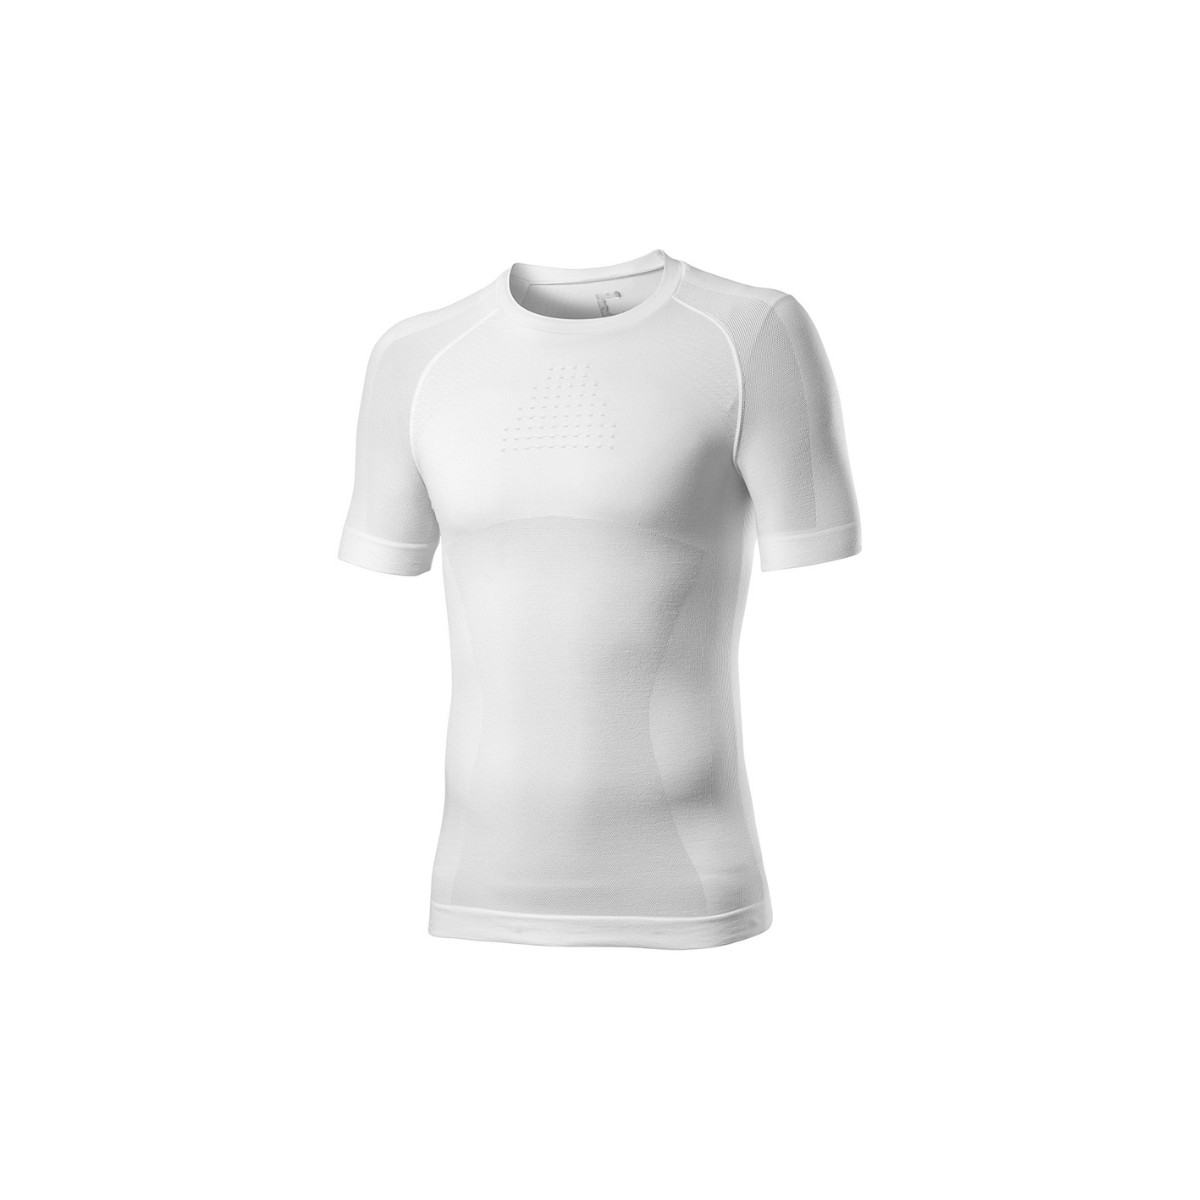 Camiseta Castelli Core manga corta Blanco, Talla L/XL